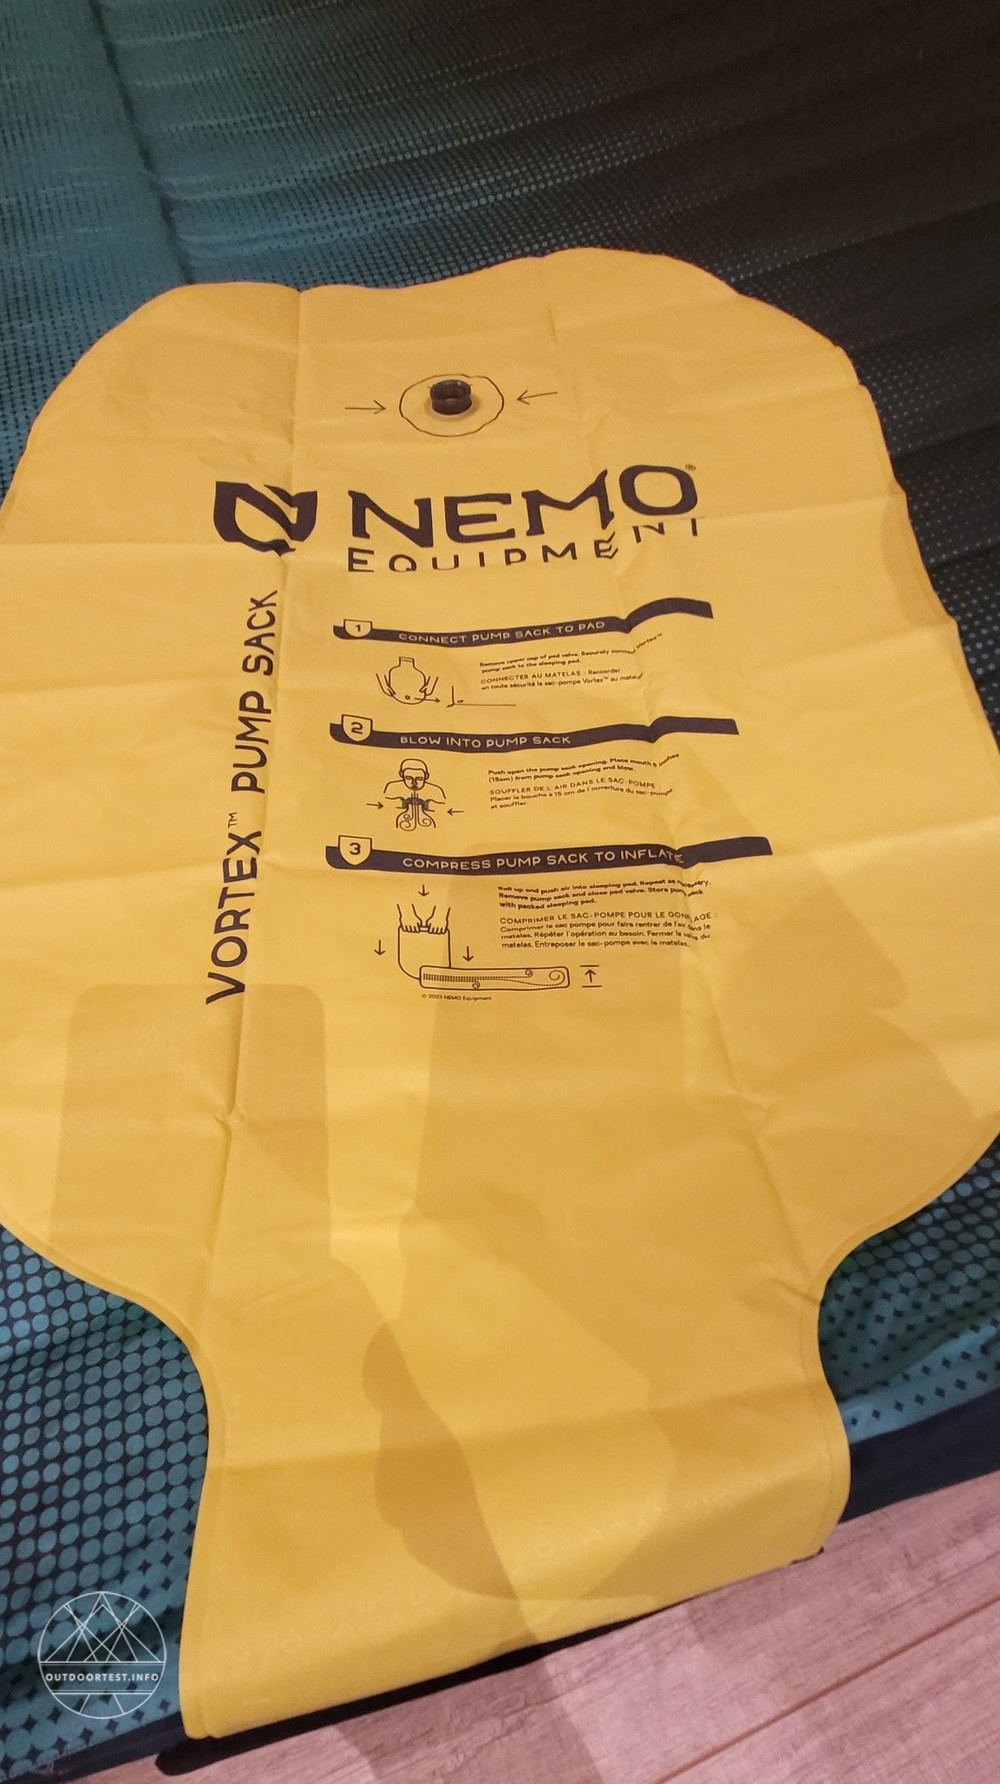 Nemo Roamer™ Self-Inflating Mattress